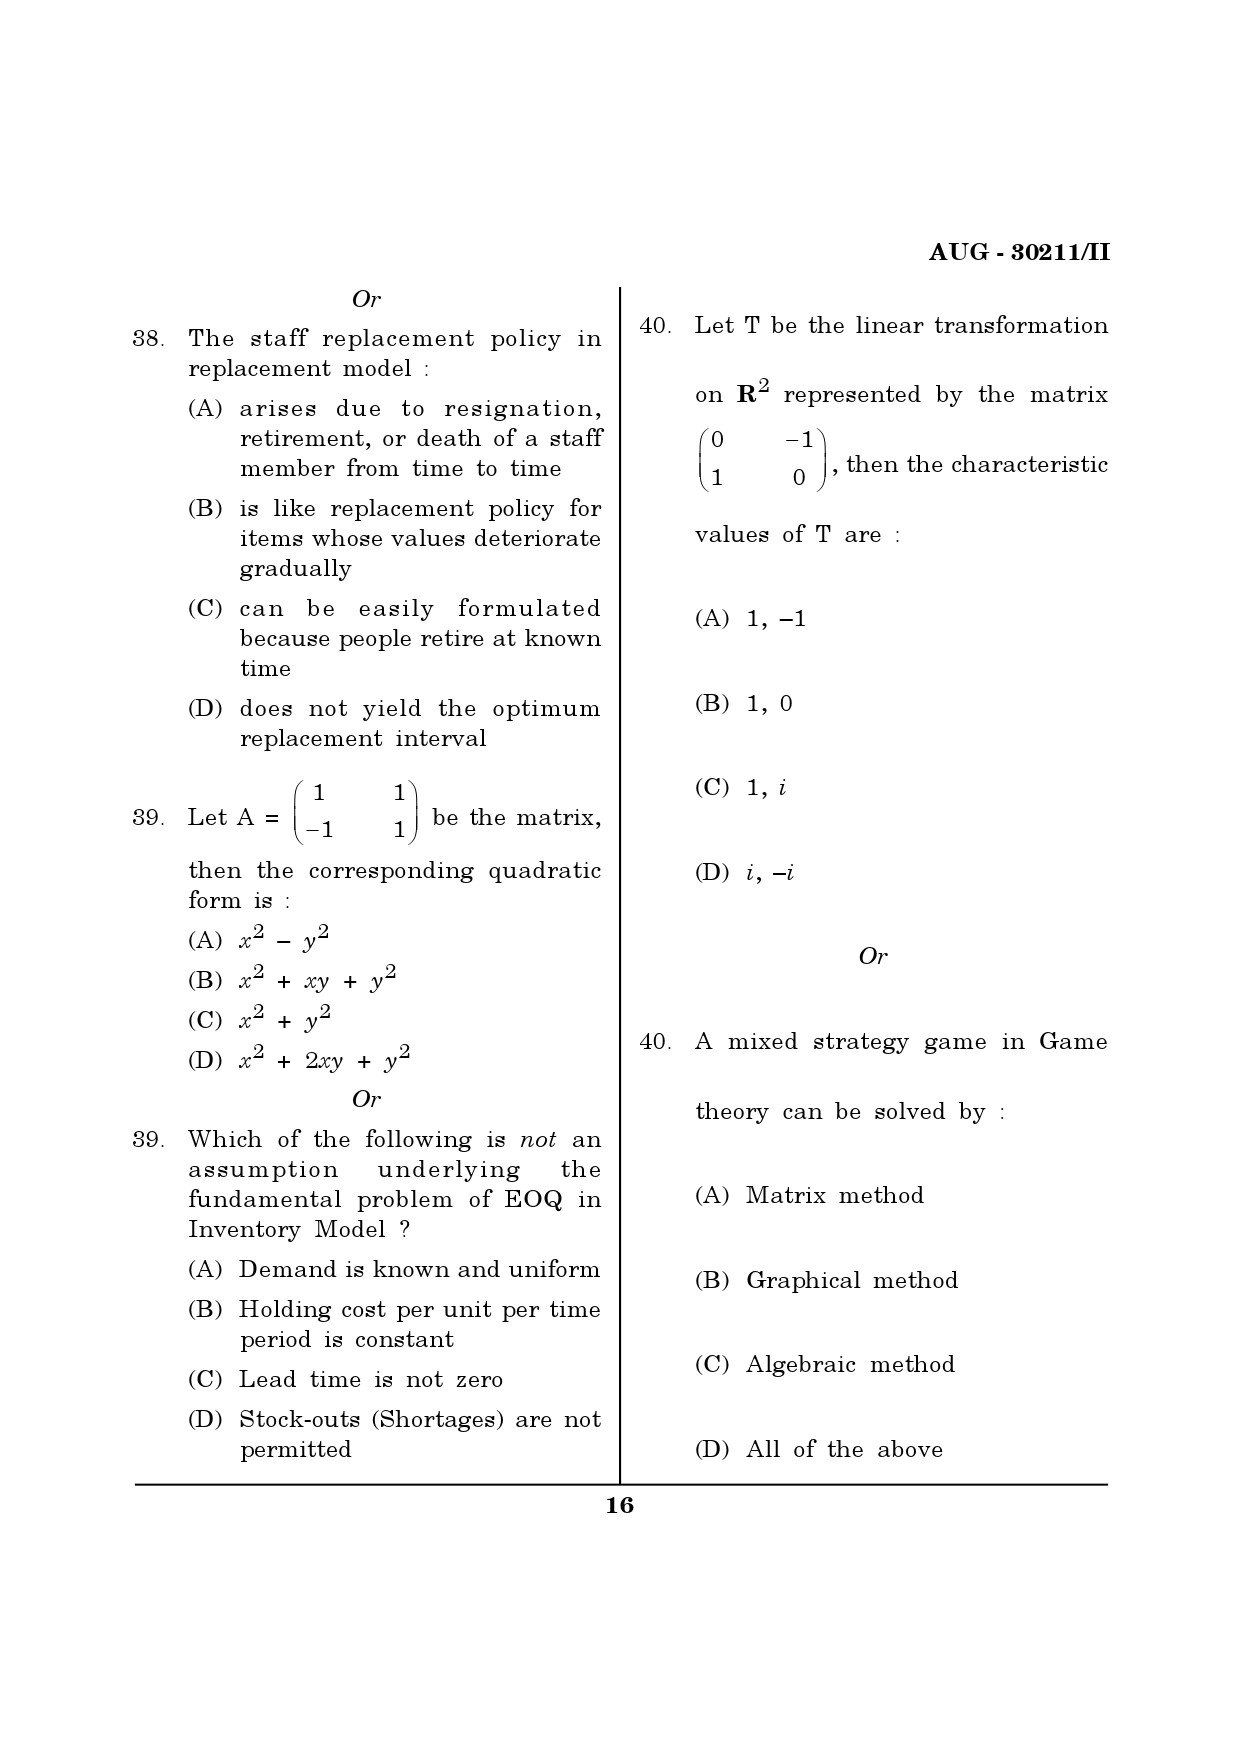 Maharashtra SET Mathematical Sciences Question Paper II August 2011 16